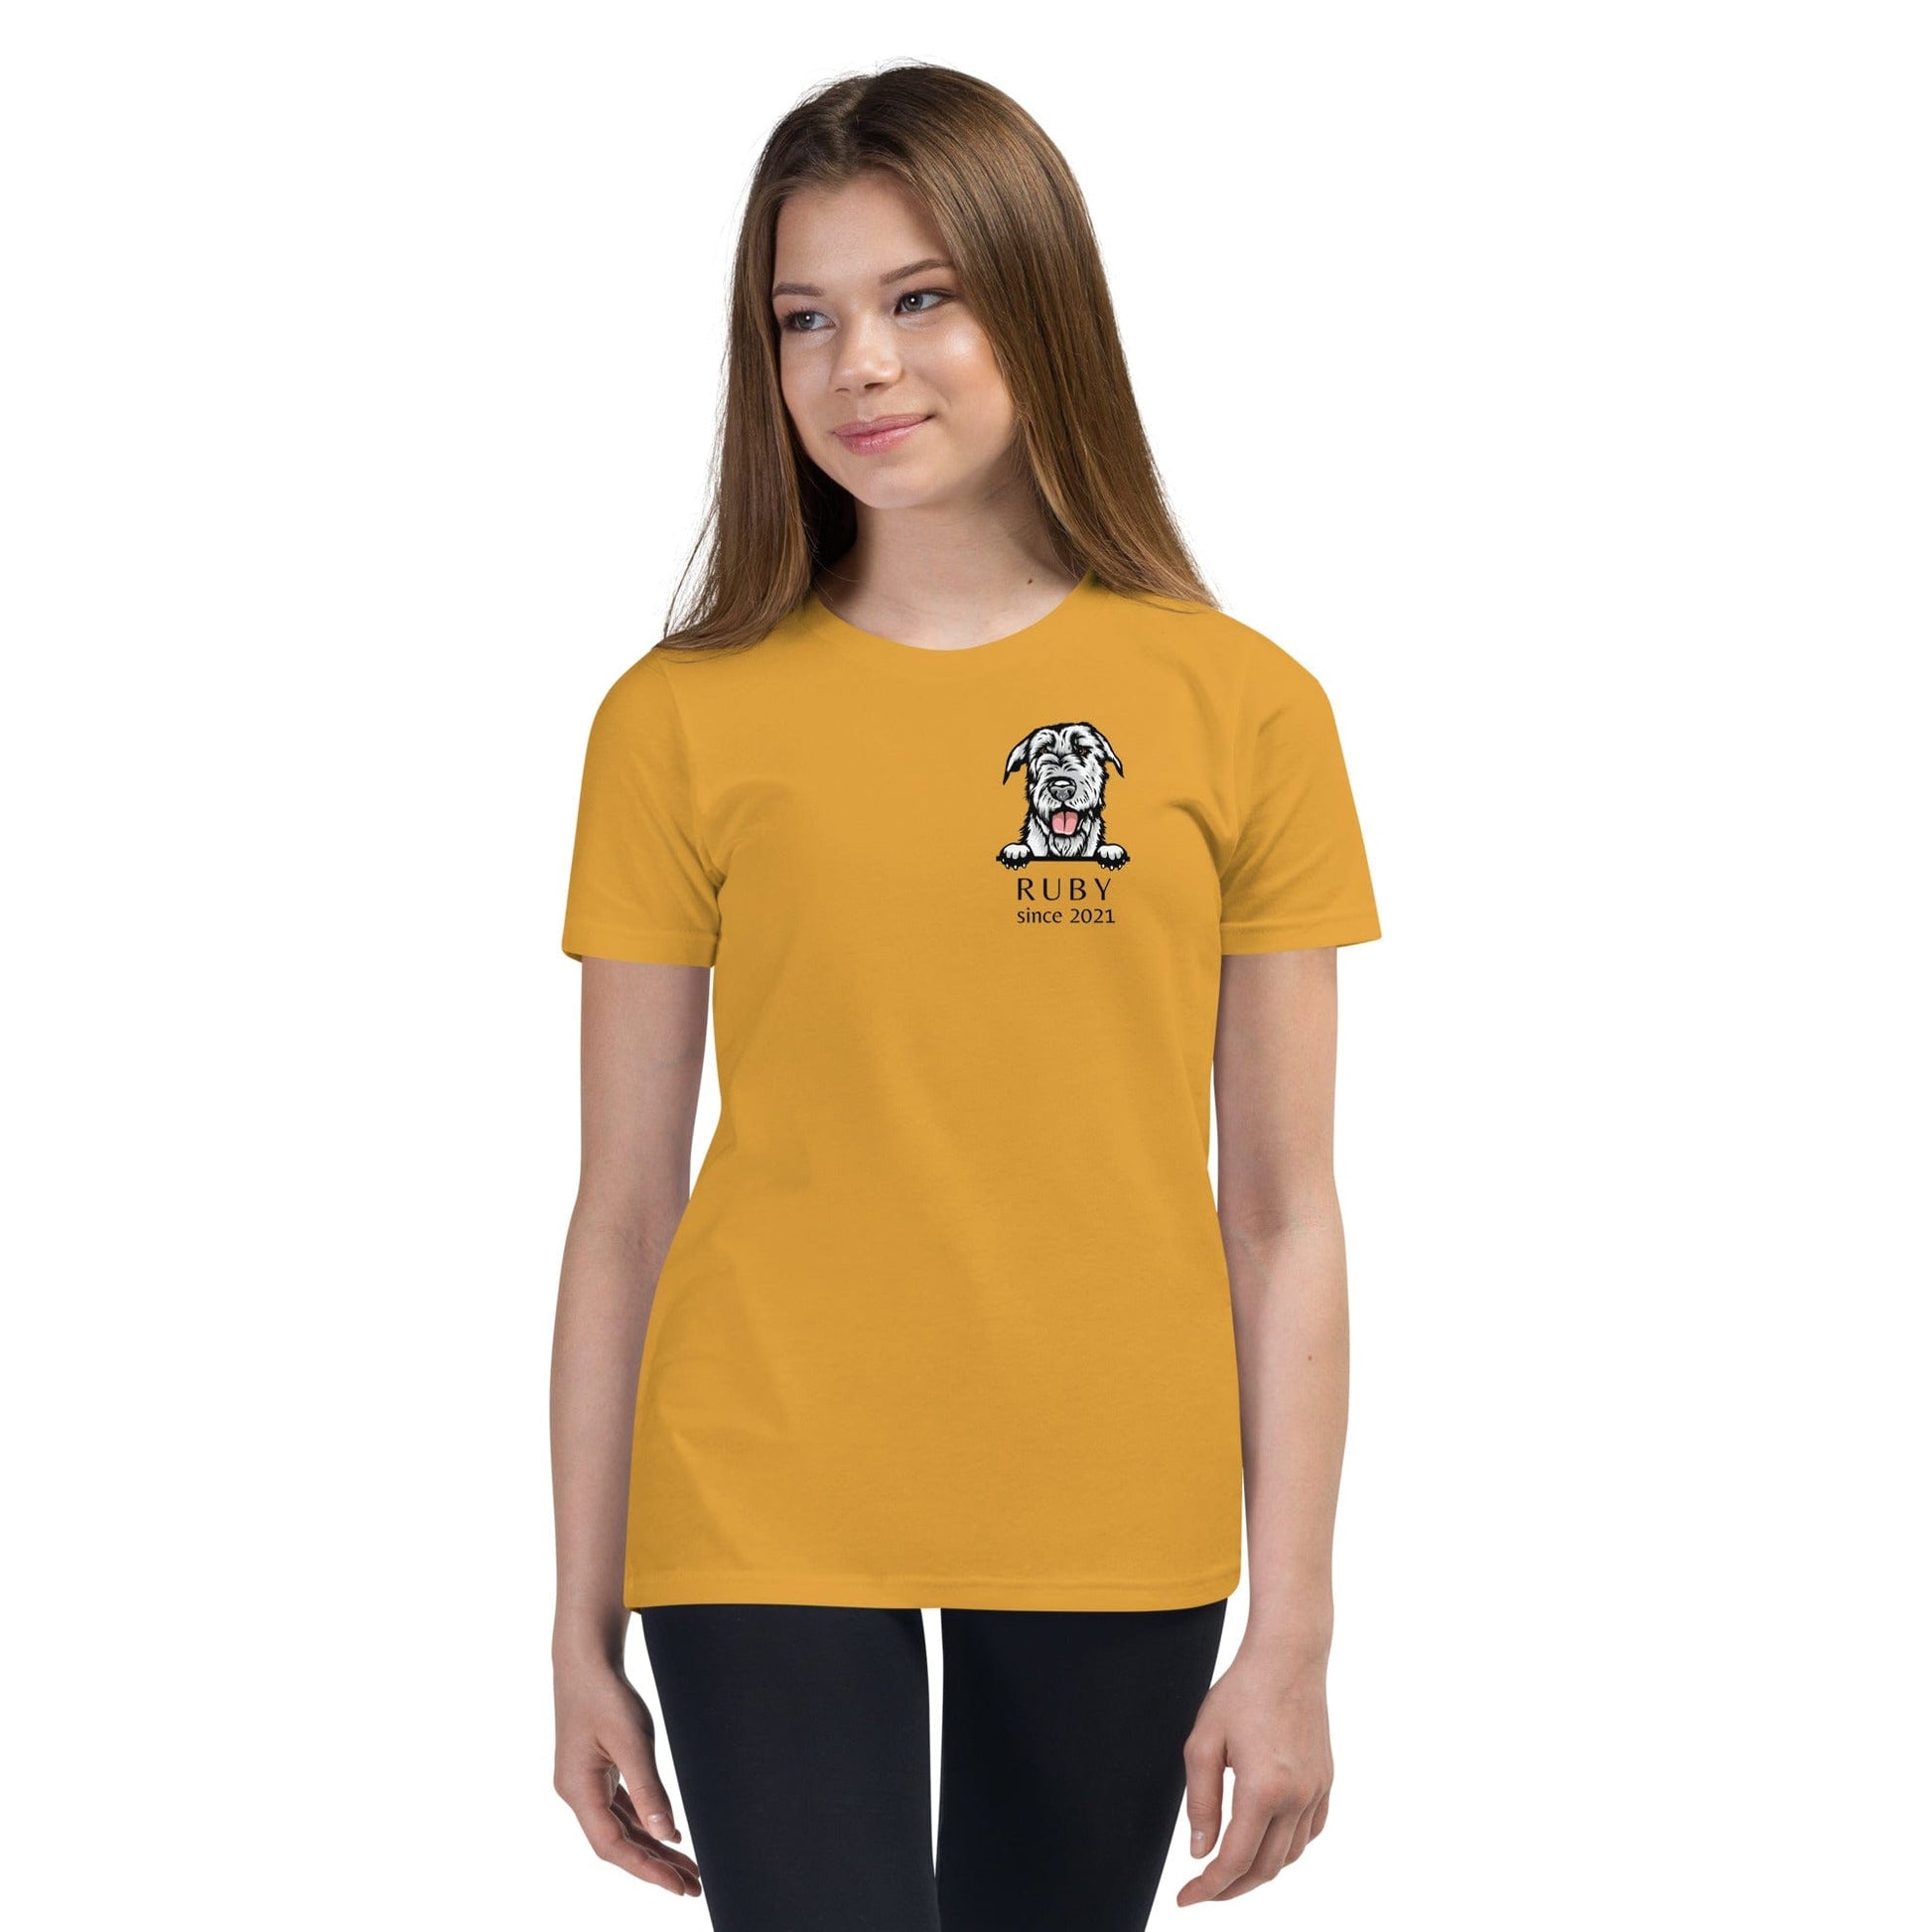 youth-shirt-with-custom-dog-breed-print-mustard